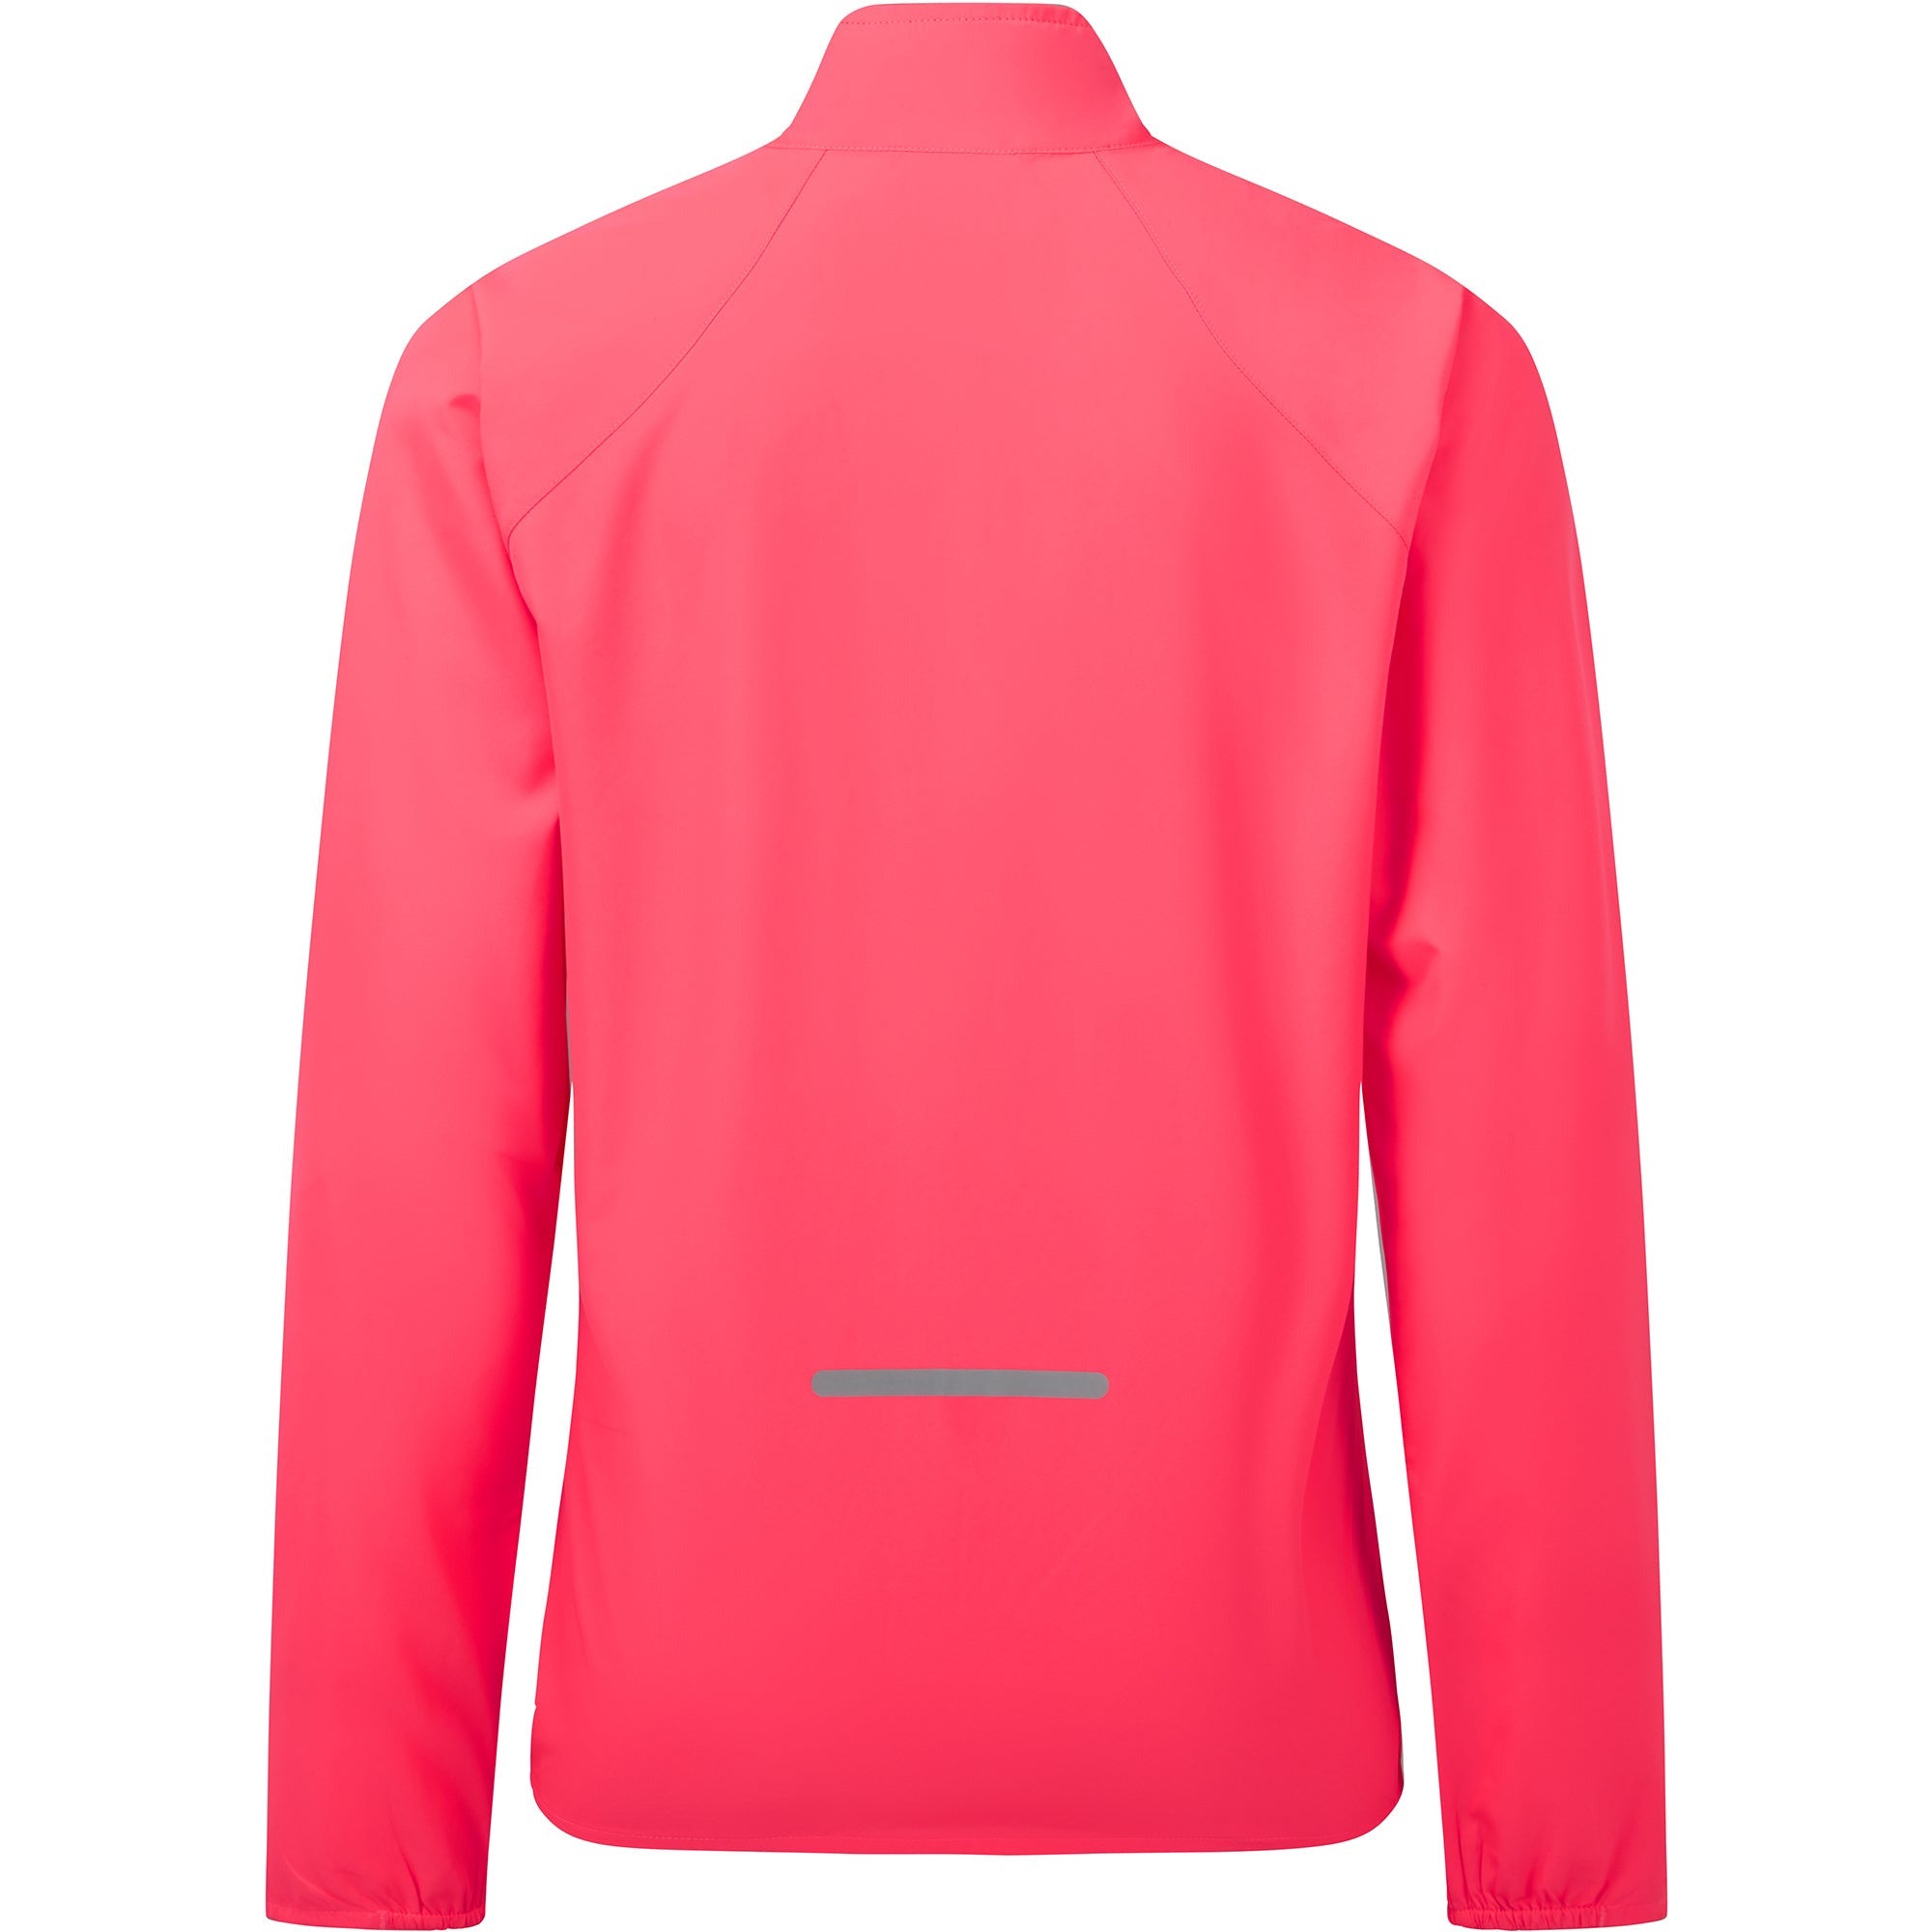 Ronhill Core Womens Running Jacket - Pink